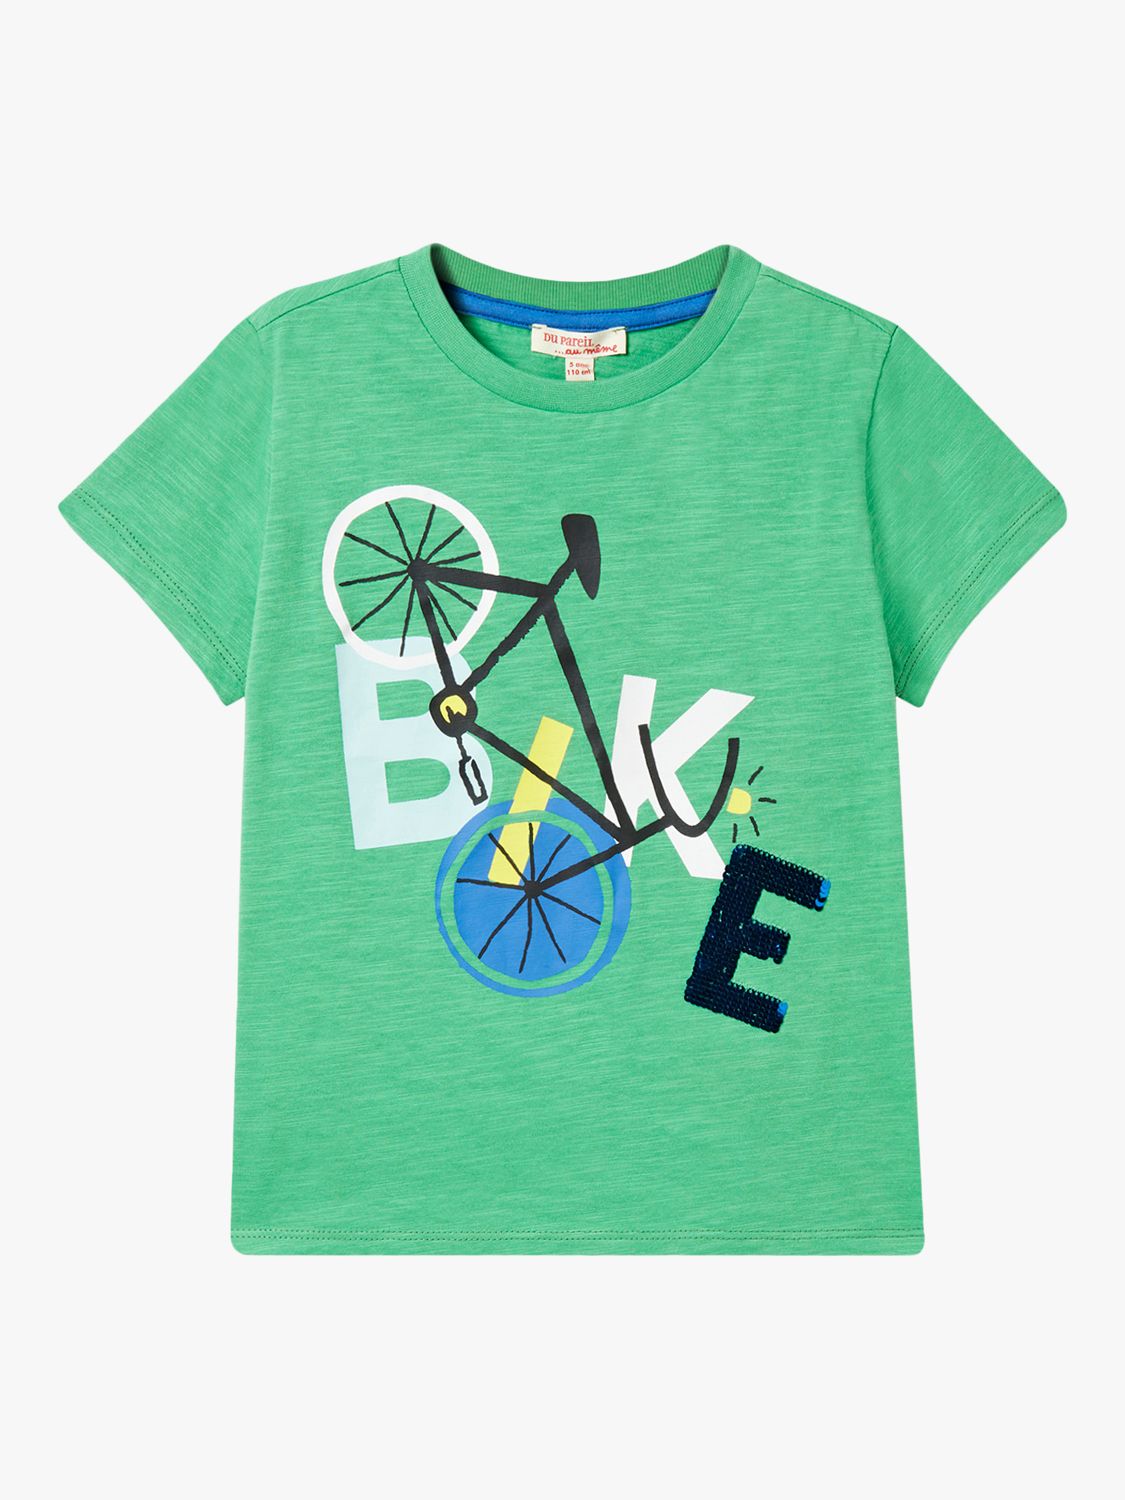 Du Pareil au même Kids' Bike Sequin Graphic T-Shirt, Green, 2 years